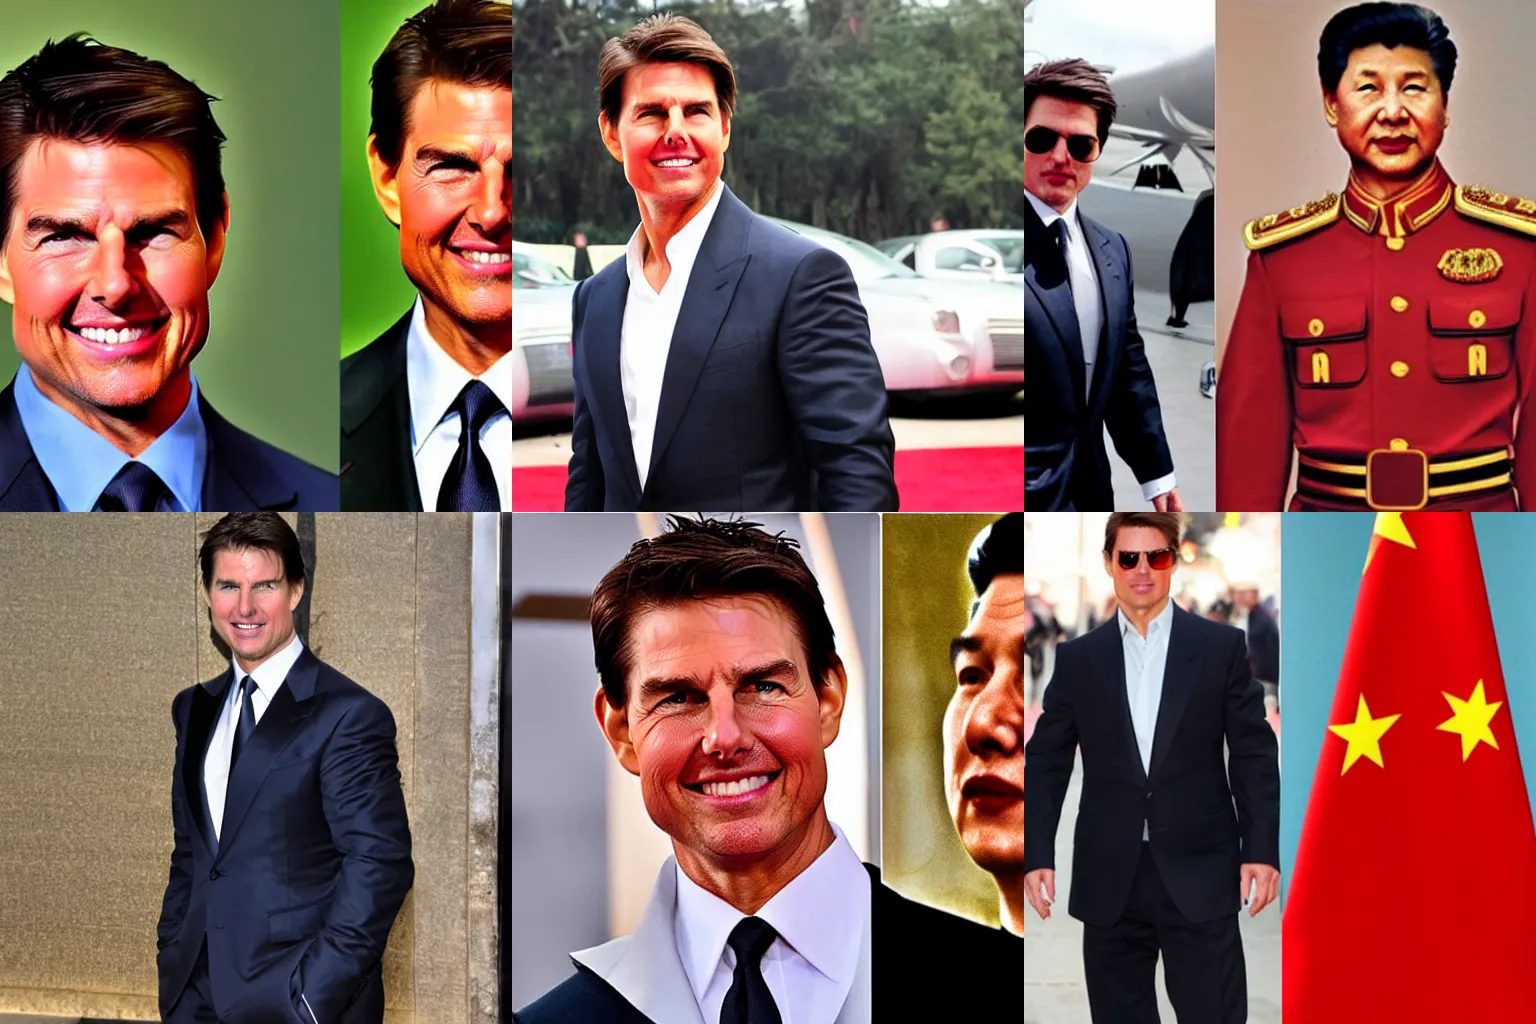 Prompt: Tom Cruise looking like Xi Jinping